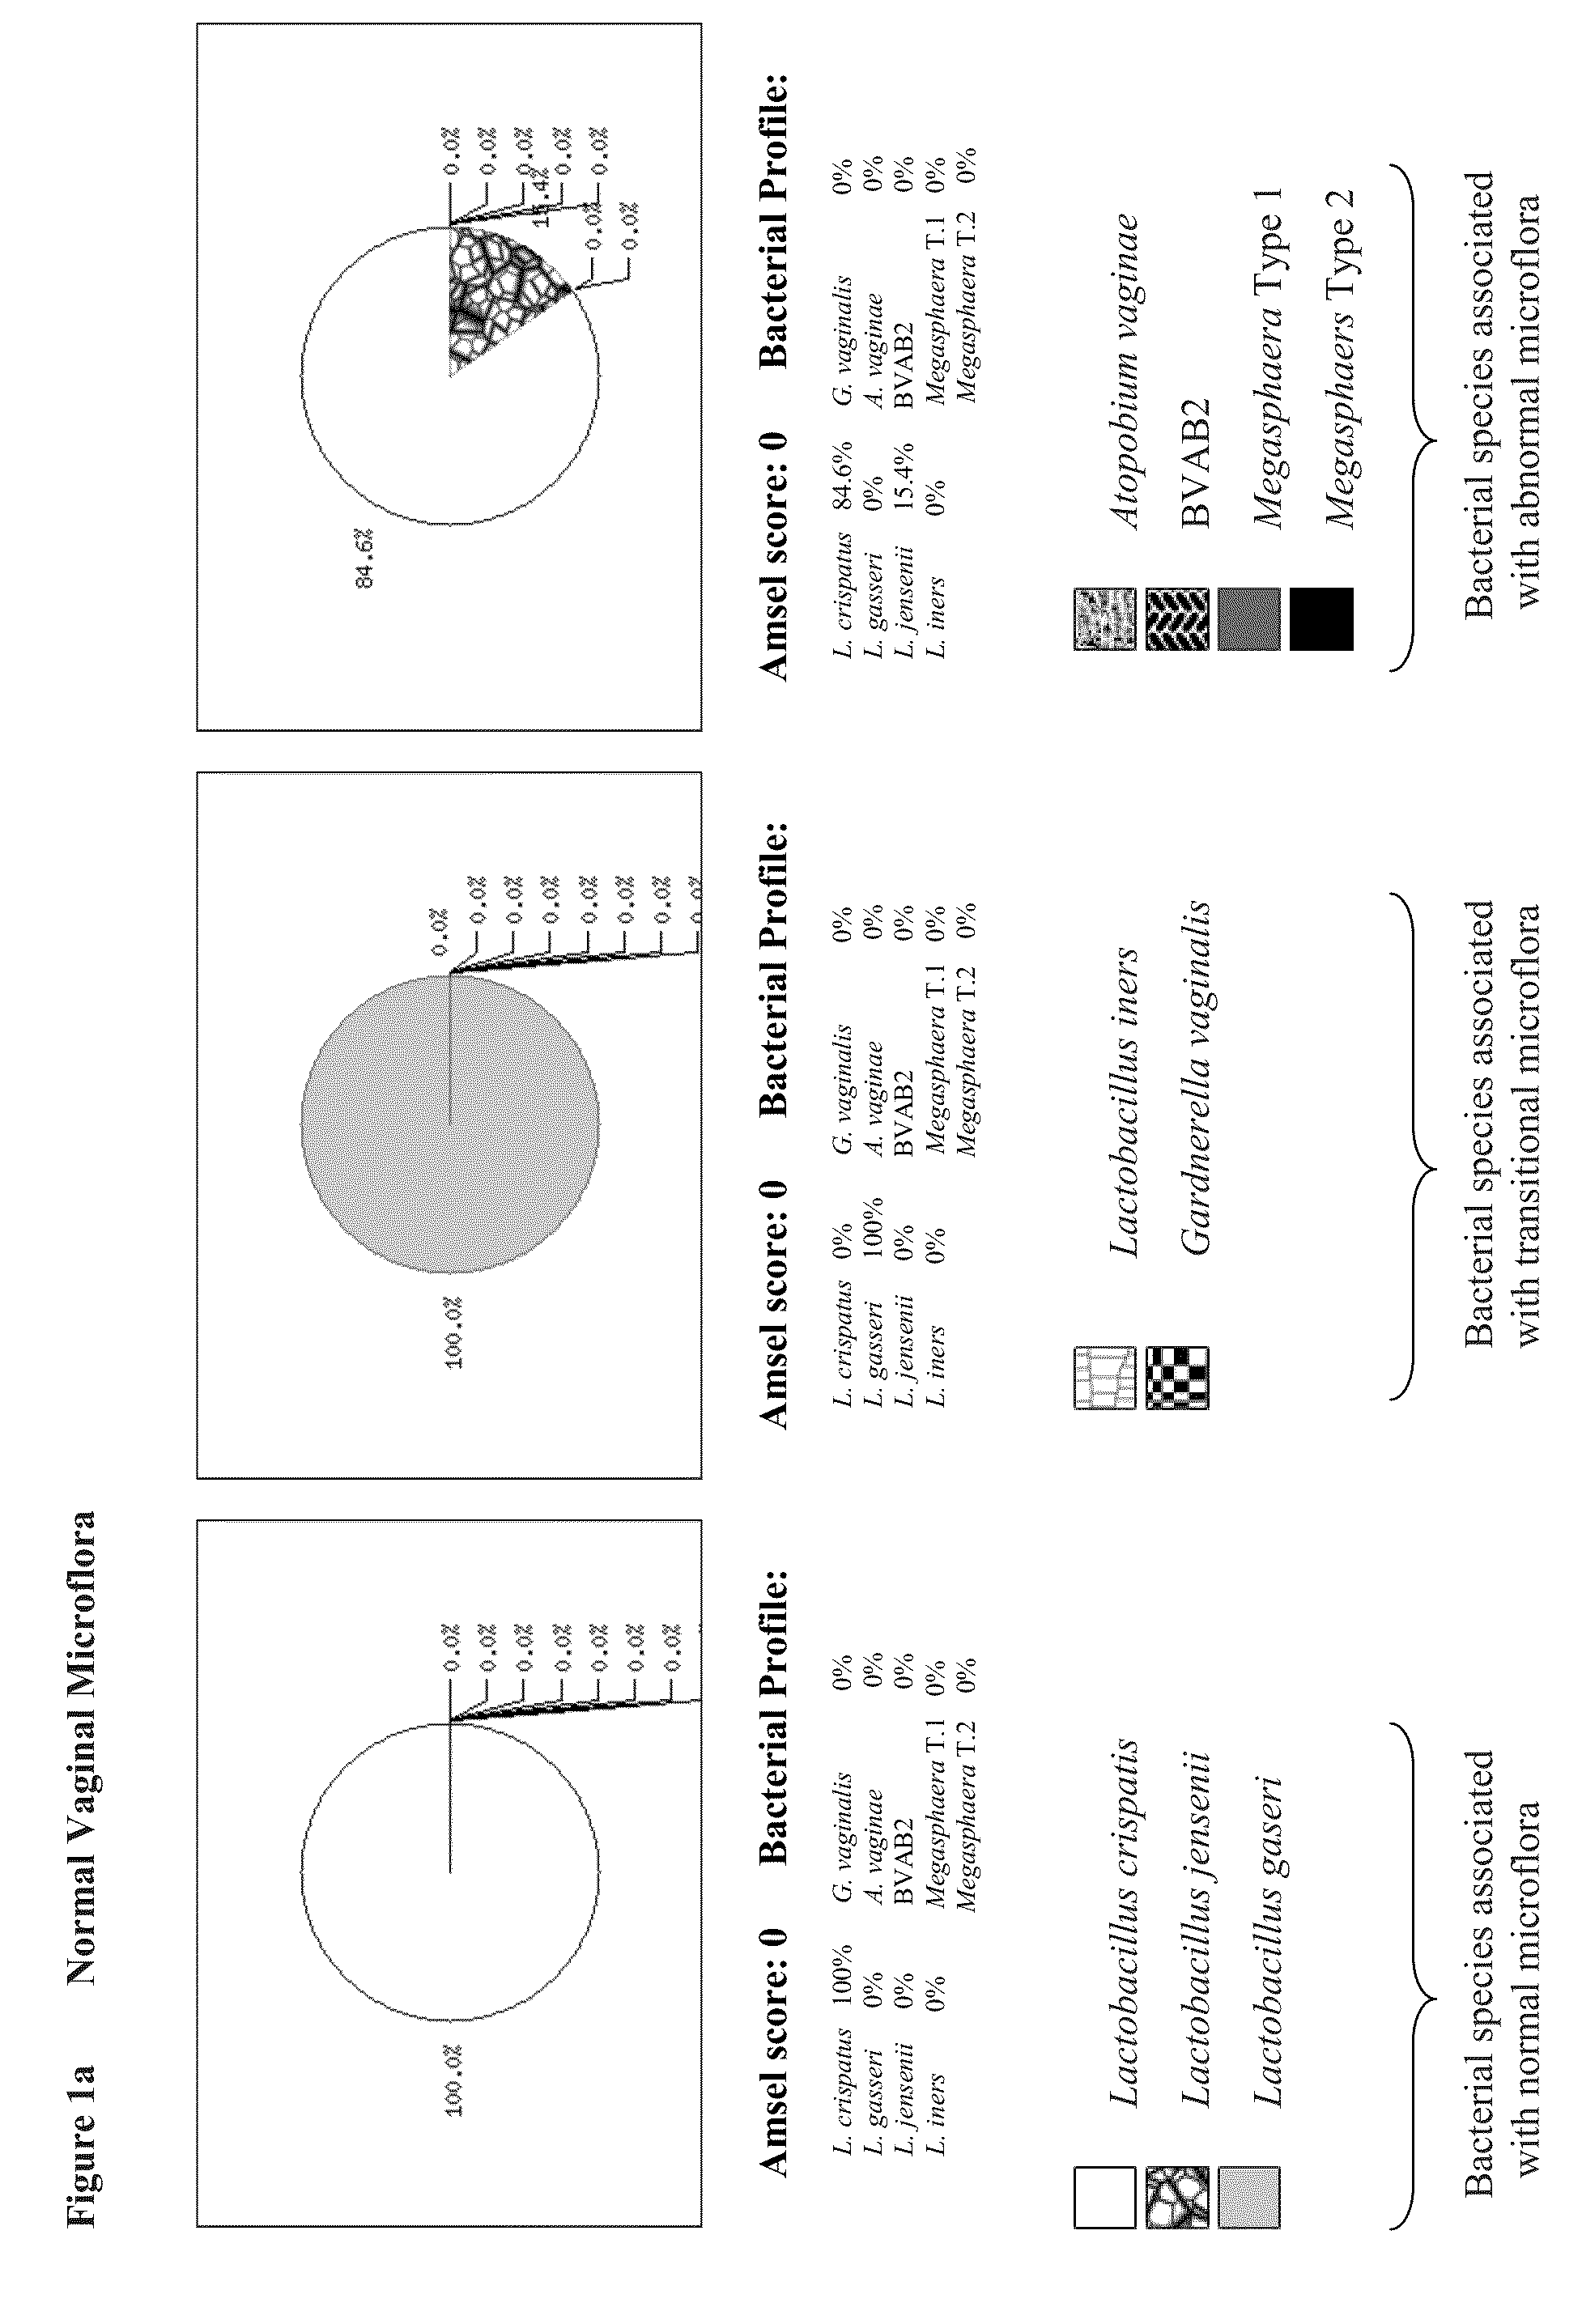 Quantitation and profiling of vaginal microflora